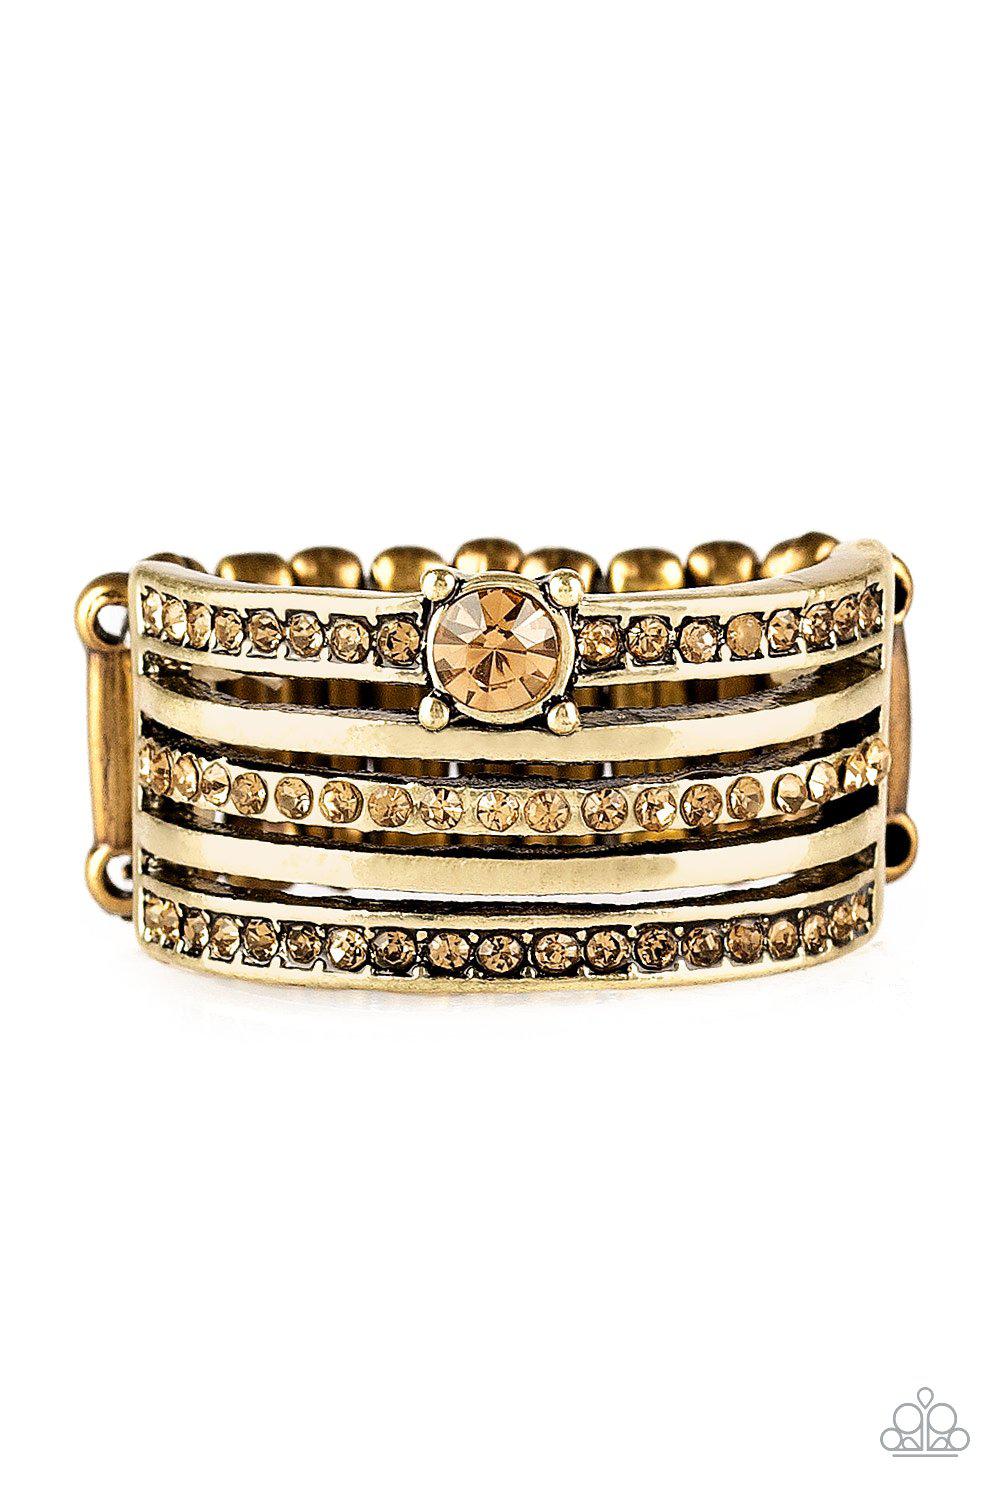 The Dealmaker Brass Rhinestone Ring - Paparazzi Accessories - lightbox -CarasShop.com - $5 Jewelry by Cara Jewels